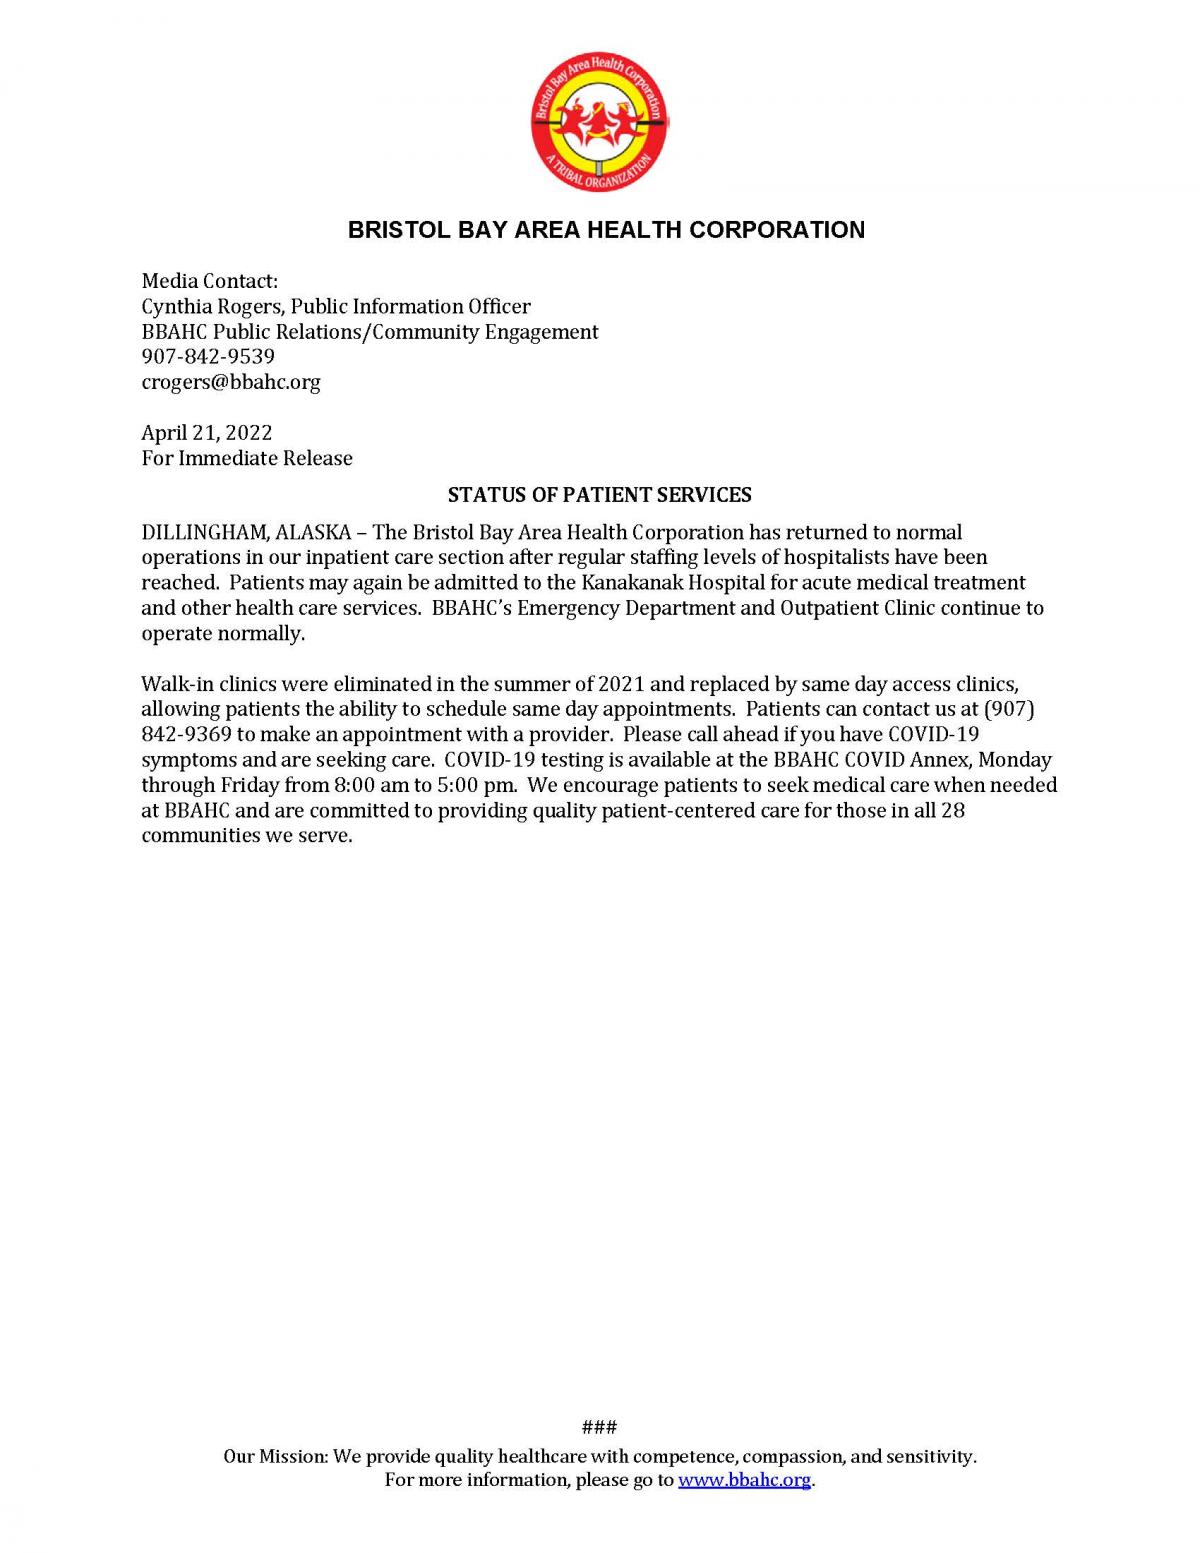 April 21, 2022 Bristol Bay Area Health Corporation Press Release